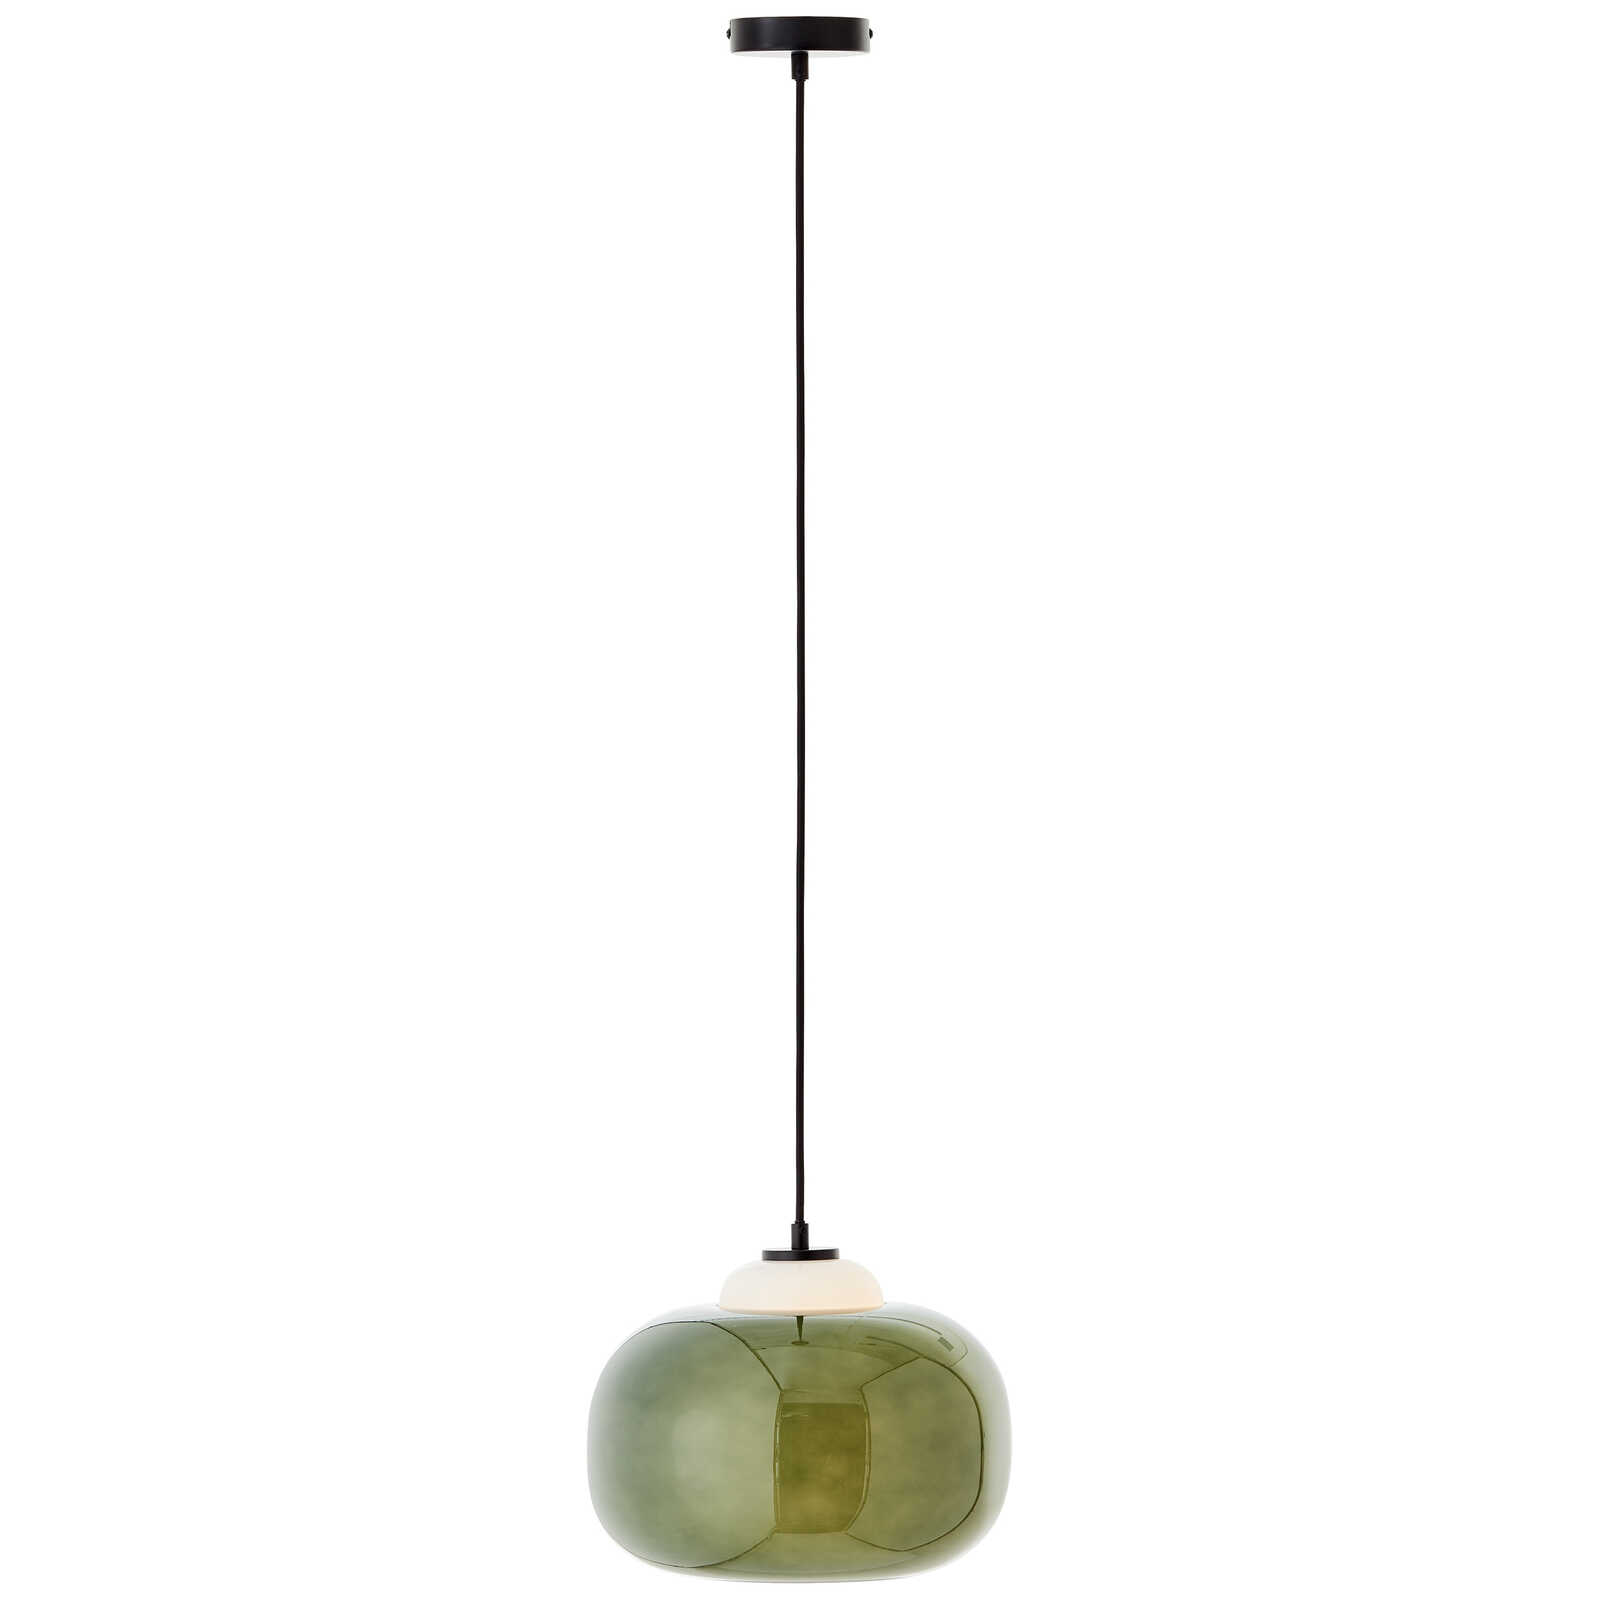             Lámpara colgante de cristal - Carla 3 - Verde
        